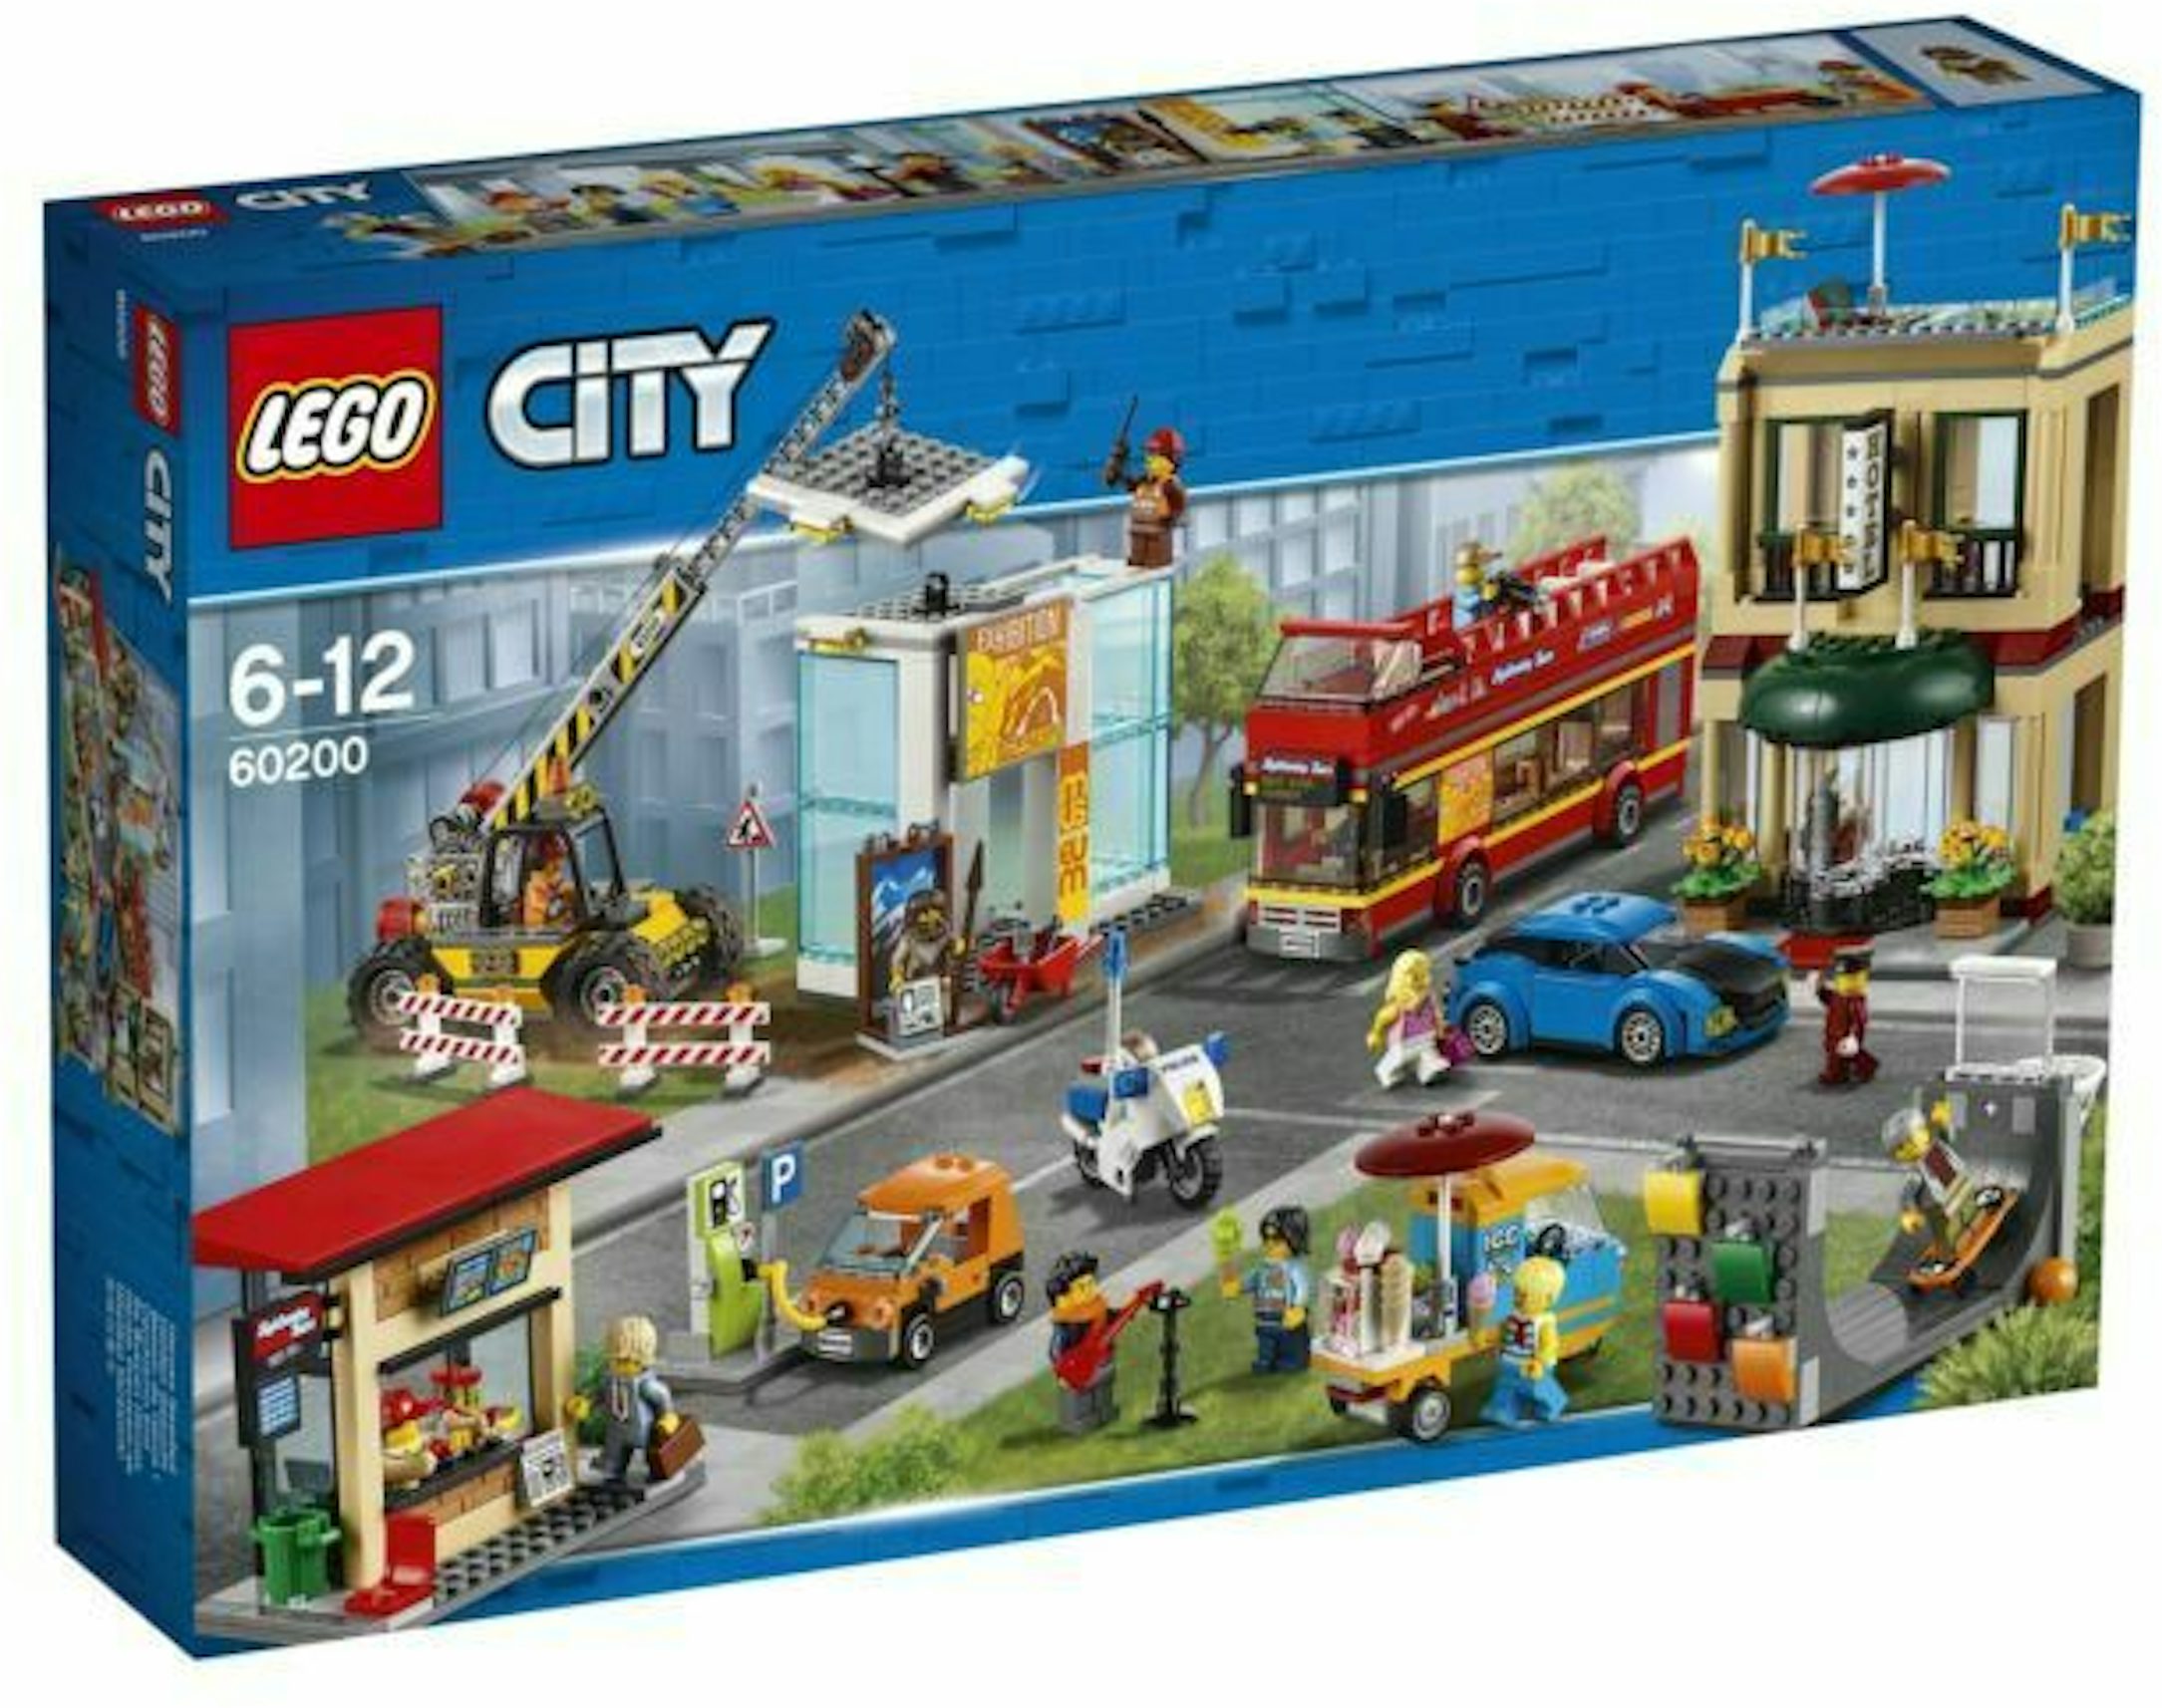 LEGO City Capital City Set 60200 - US